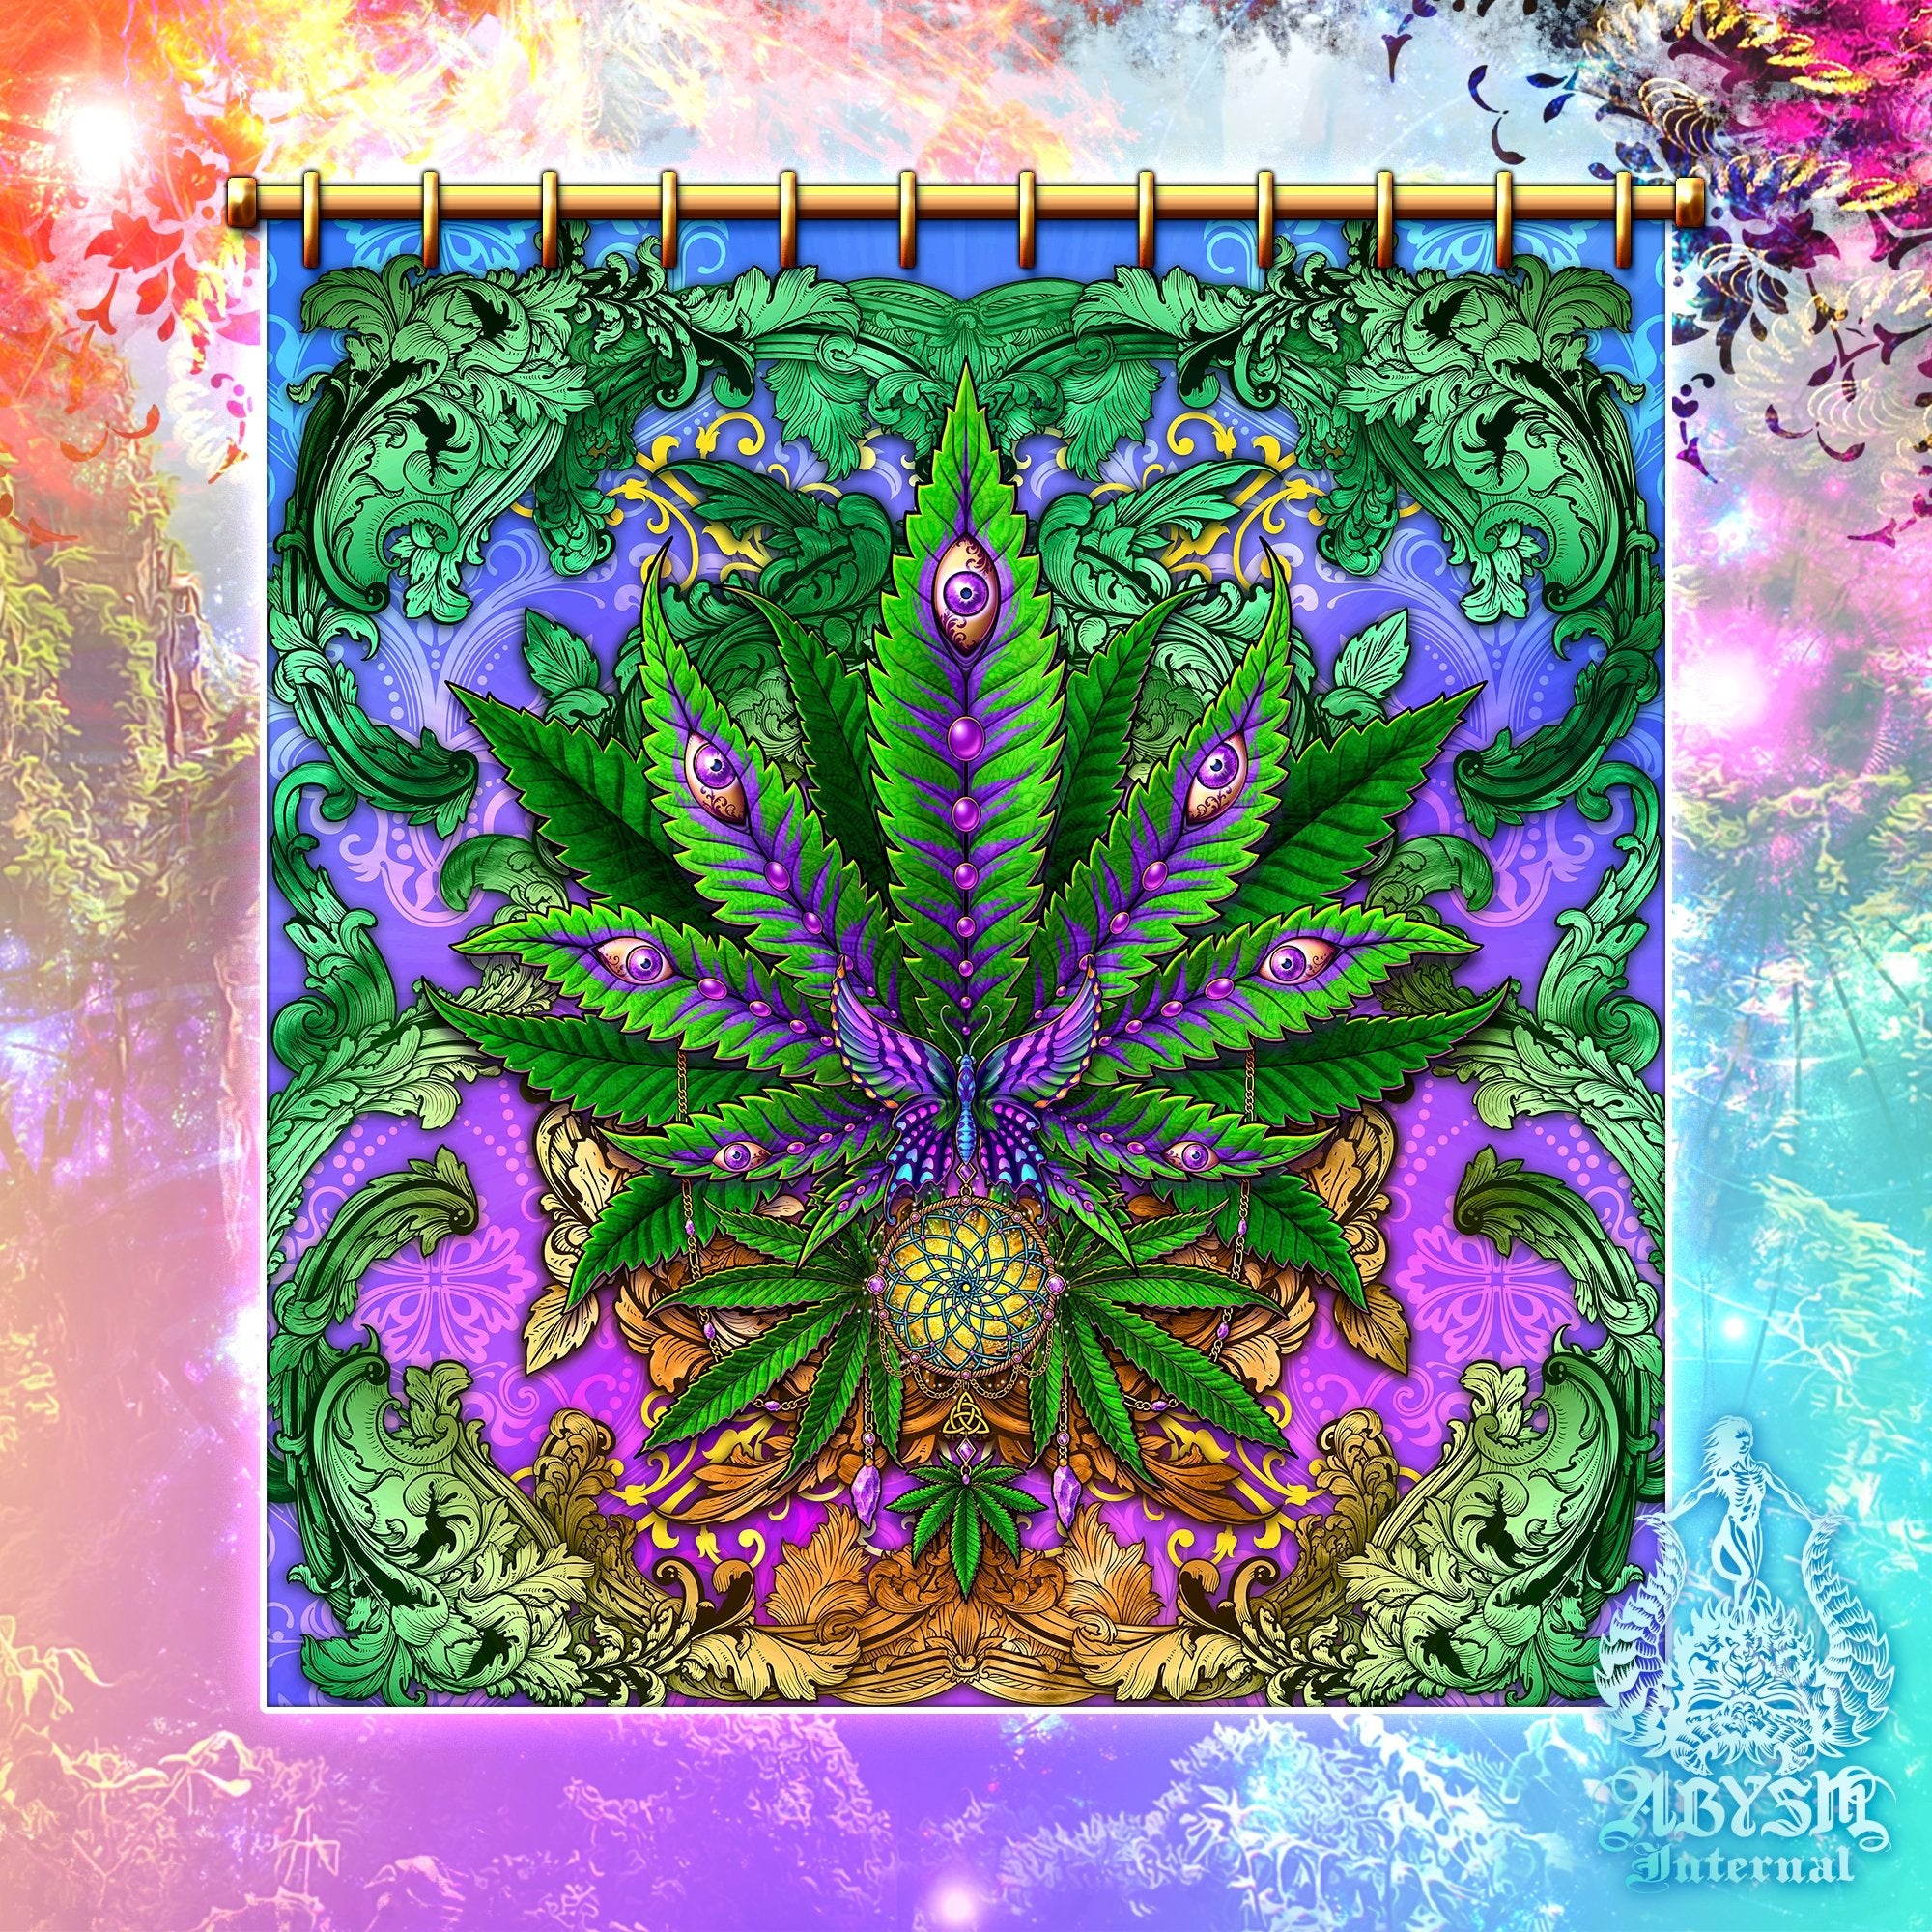 Weed Shower Curtain, Indie Bathroom Decor, Cannabis Print, Hippie 420 Home Art - Marijuana, Nature - Abysm Internal